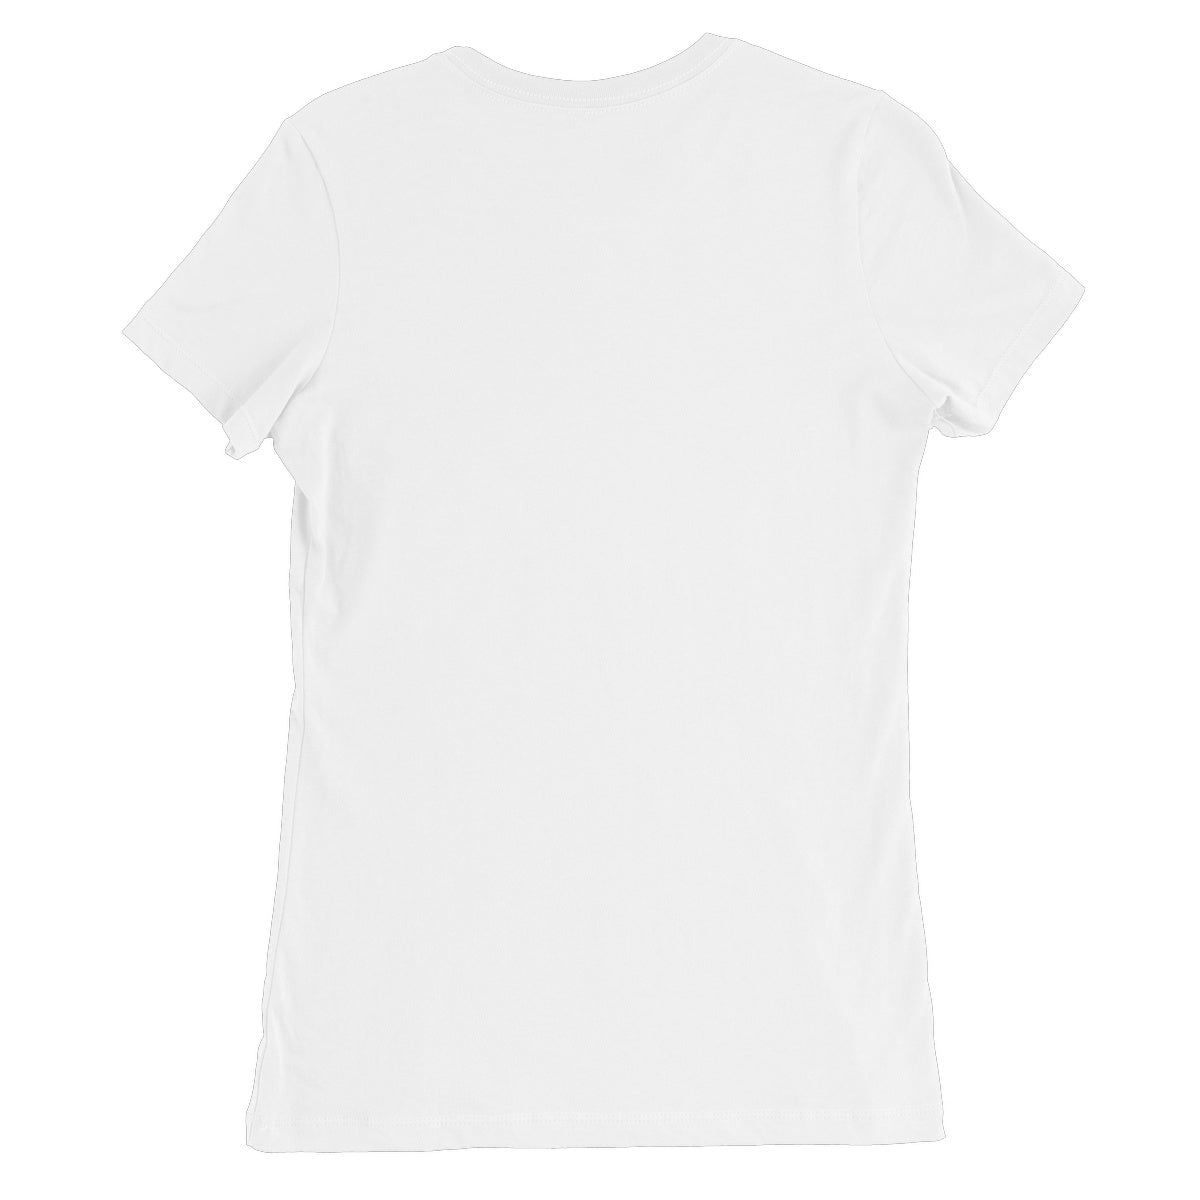 Tasha Steelz Women's Favourite T-Shirt